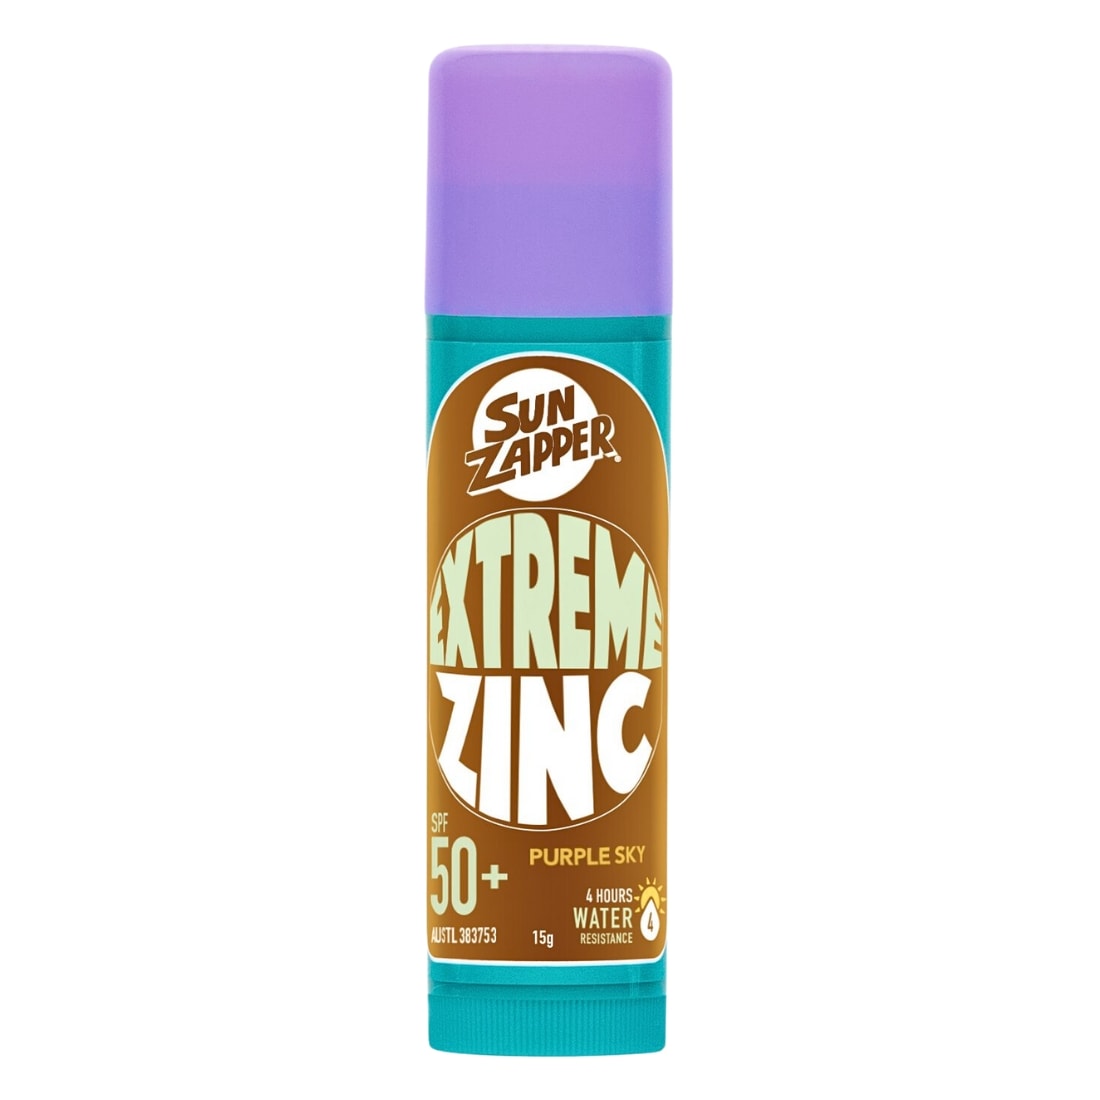 Sun Zapper Extreme Zinc Spf50+ Face Stick - Purple Sky - Sunscreen by Sun Zapper 15g